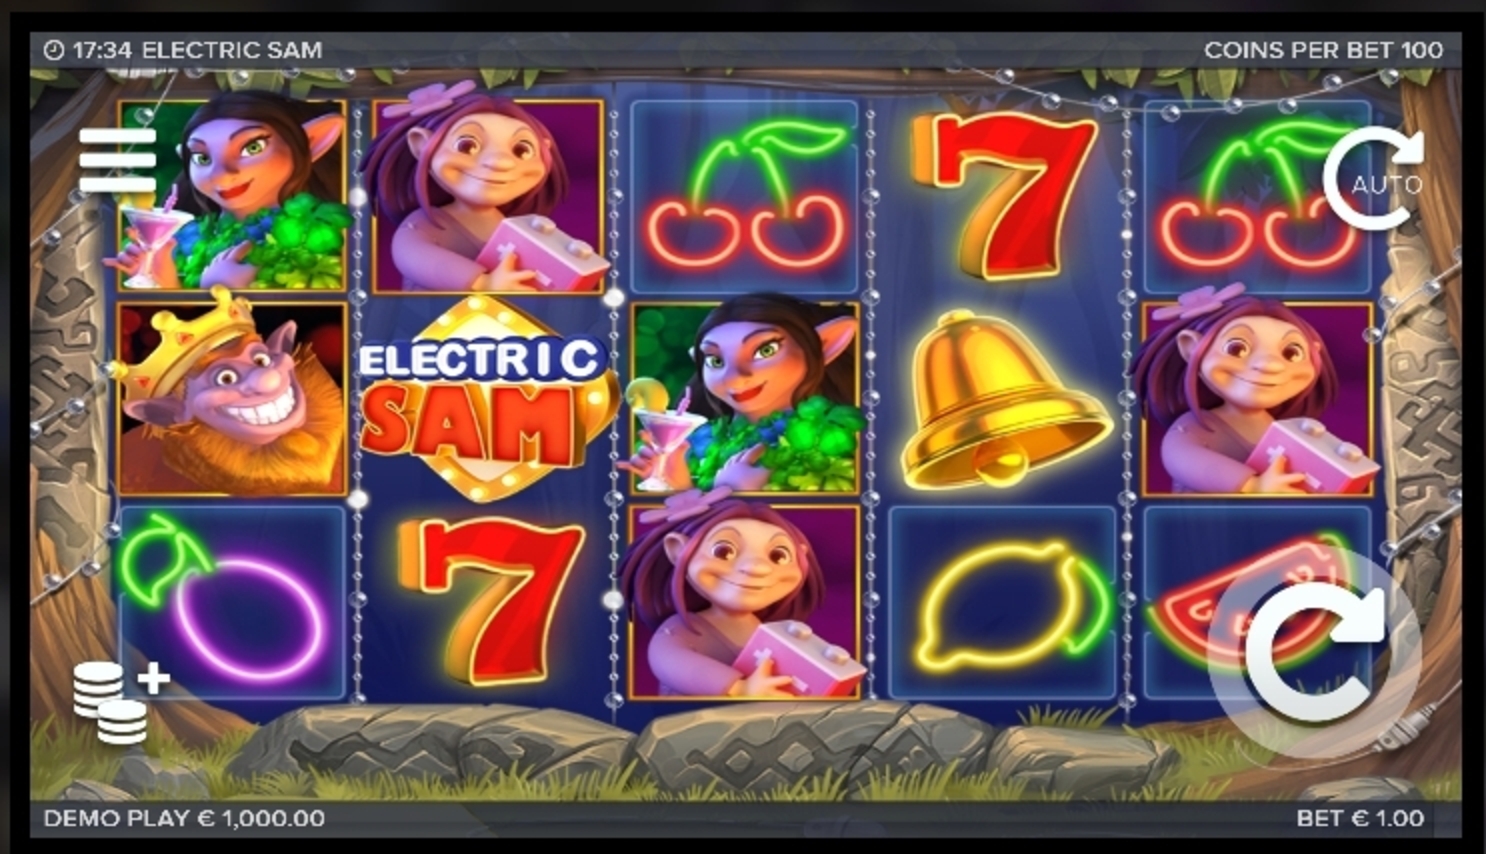 Electric Sam Slot Machine